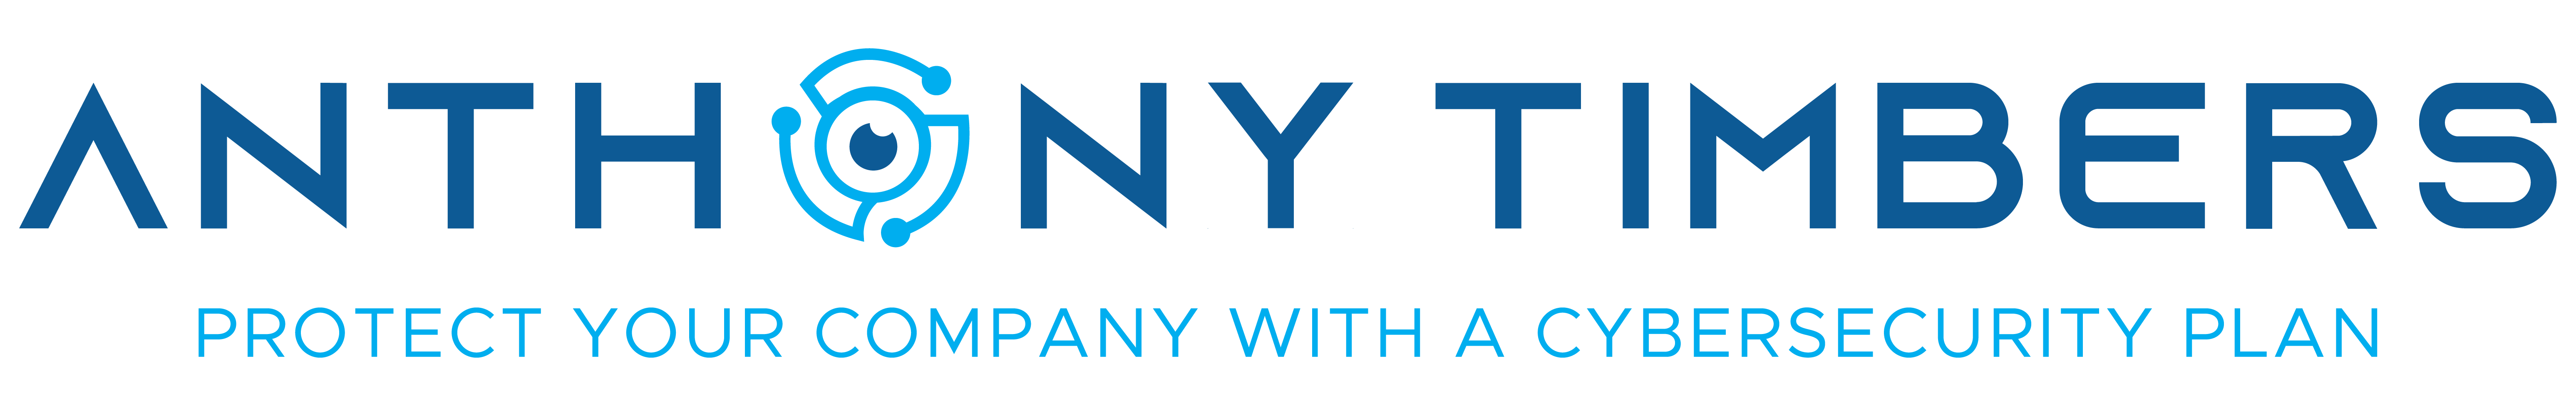 anthony timbers logo